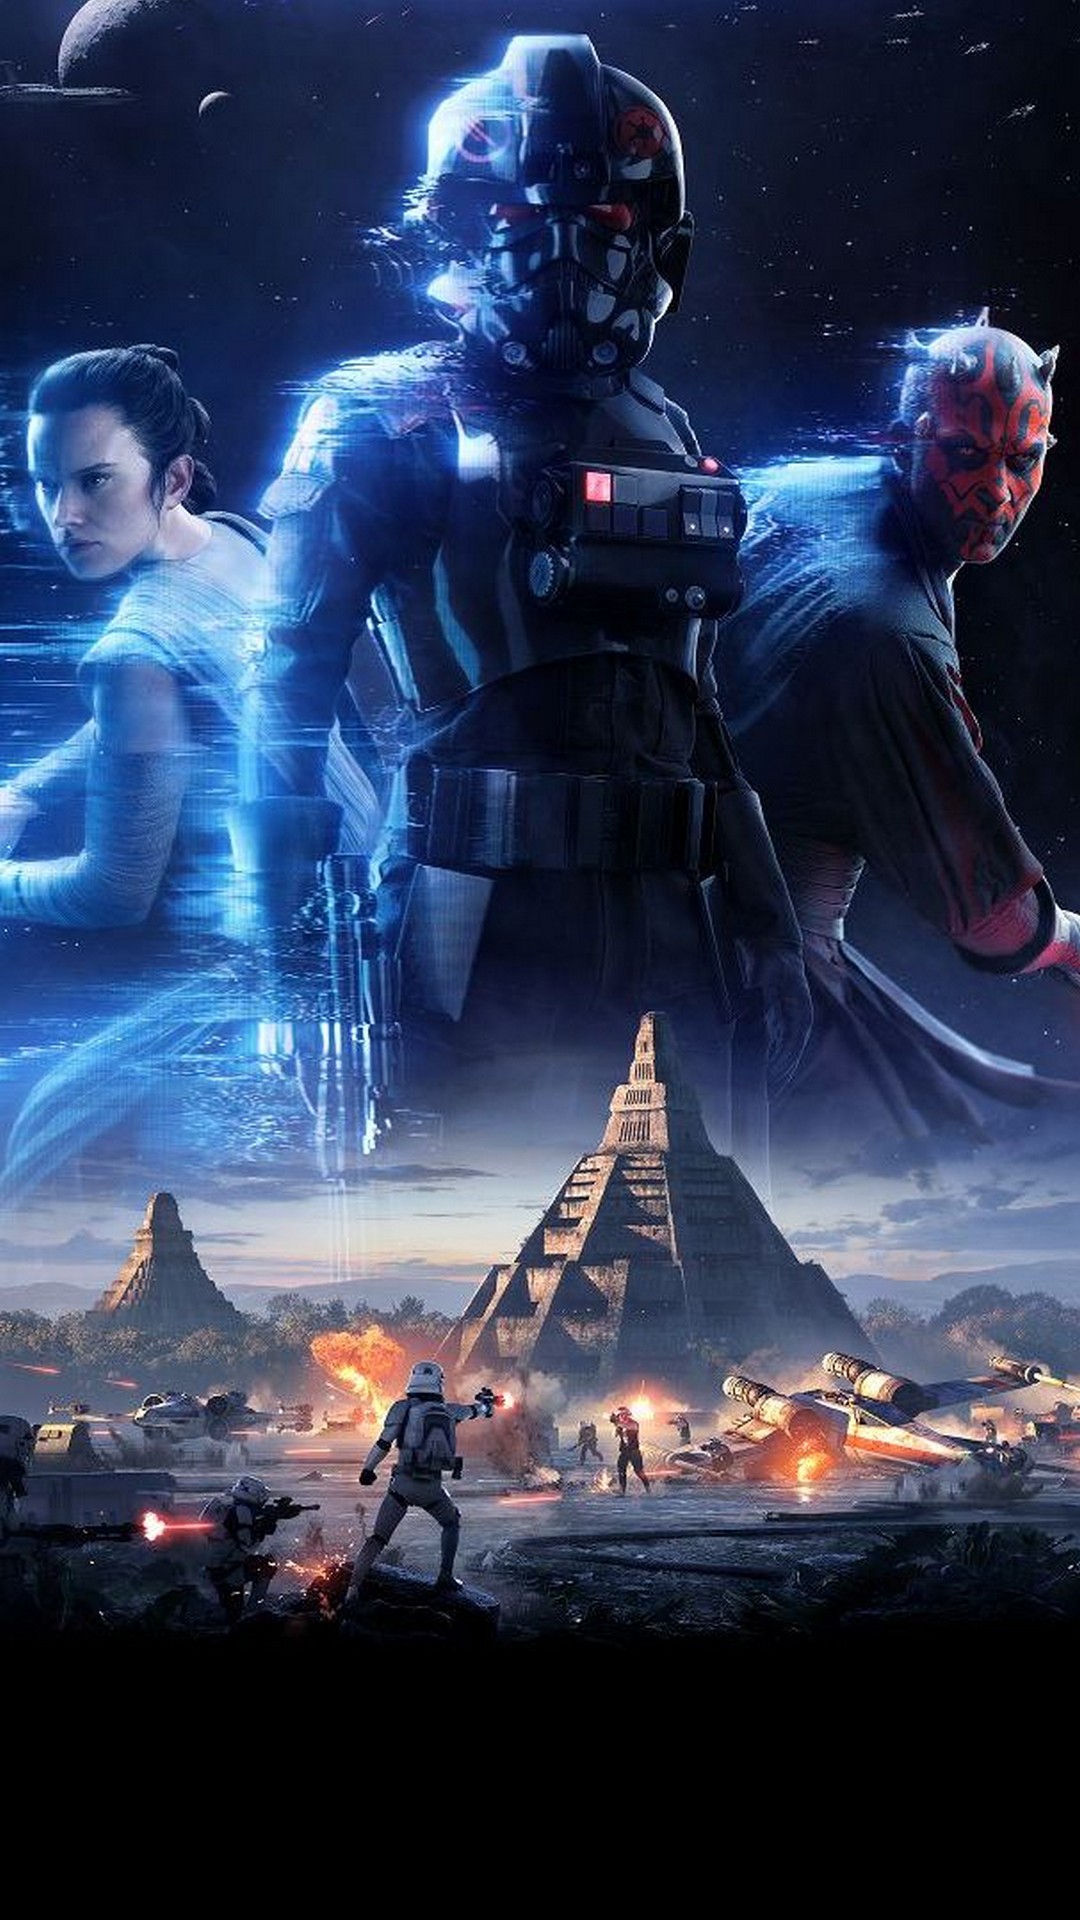 Star Wars Battlefront 2 Games iPhone Wallpaper resolution 1080x1920